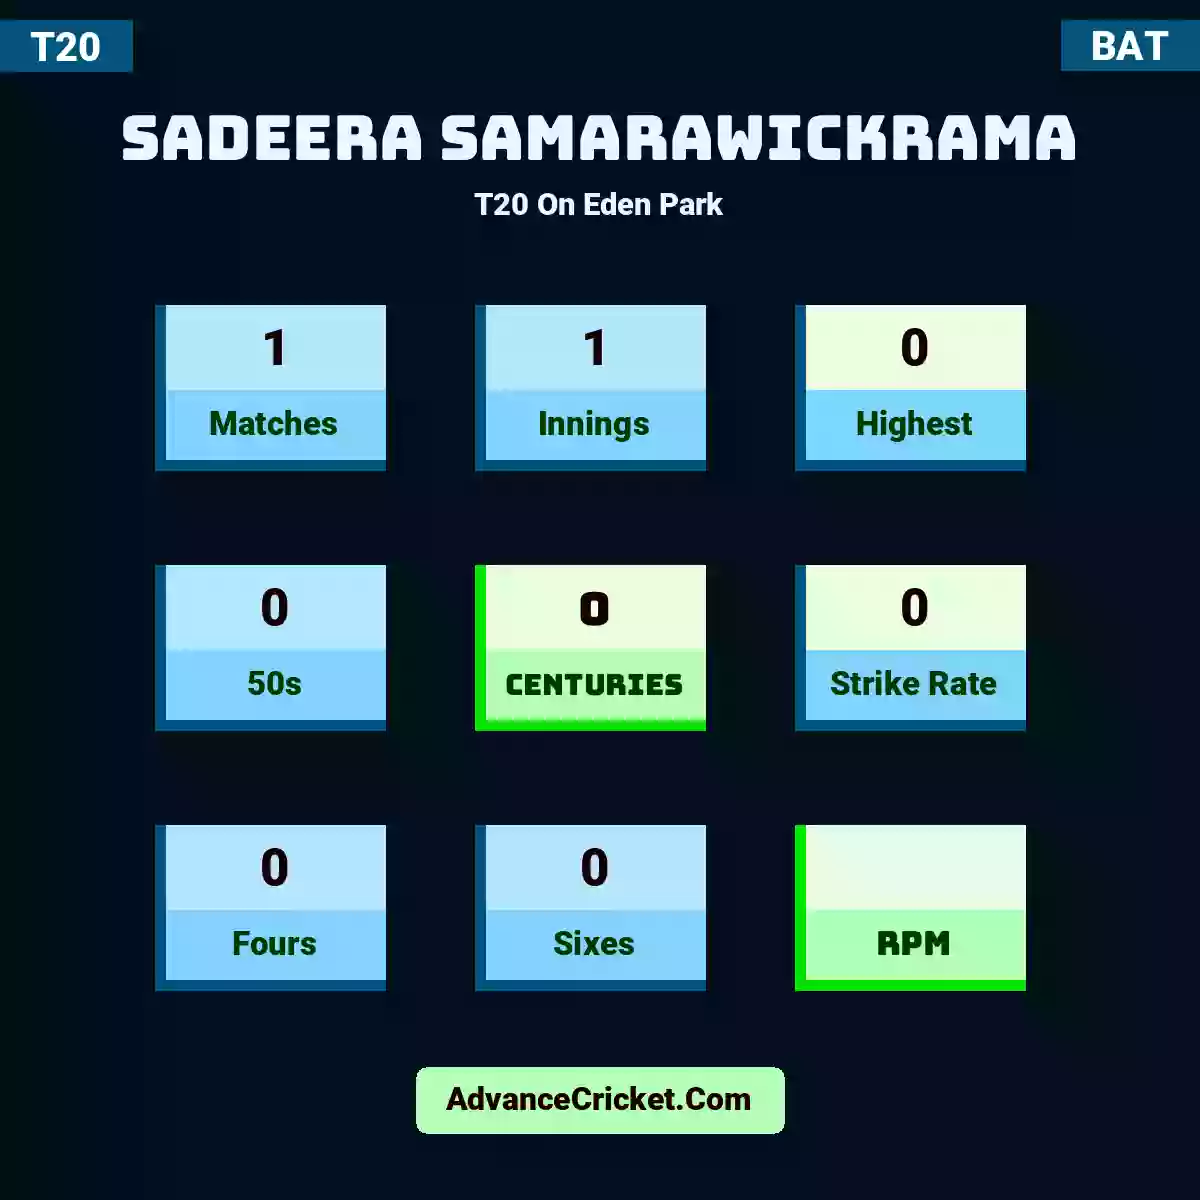 Sadeera Samarawickrama T20  On Eden Park, Sadeera Samarawickrama played 1 matches, scored 0 runs as highest, 0 half-centuries, and 0 centuries, with a strike rate of 0. S.Samarawickrama hit 0 fours and 0 sixes.